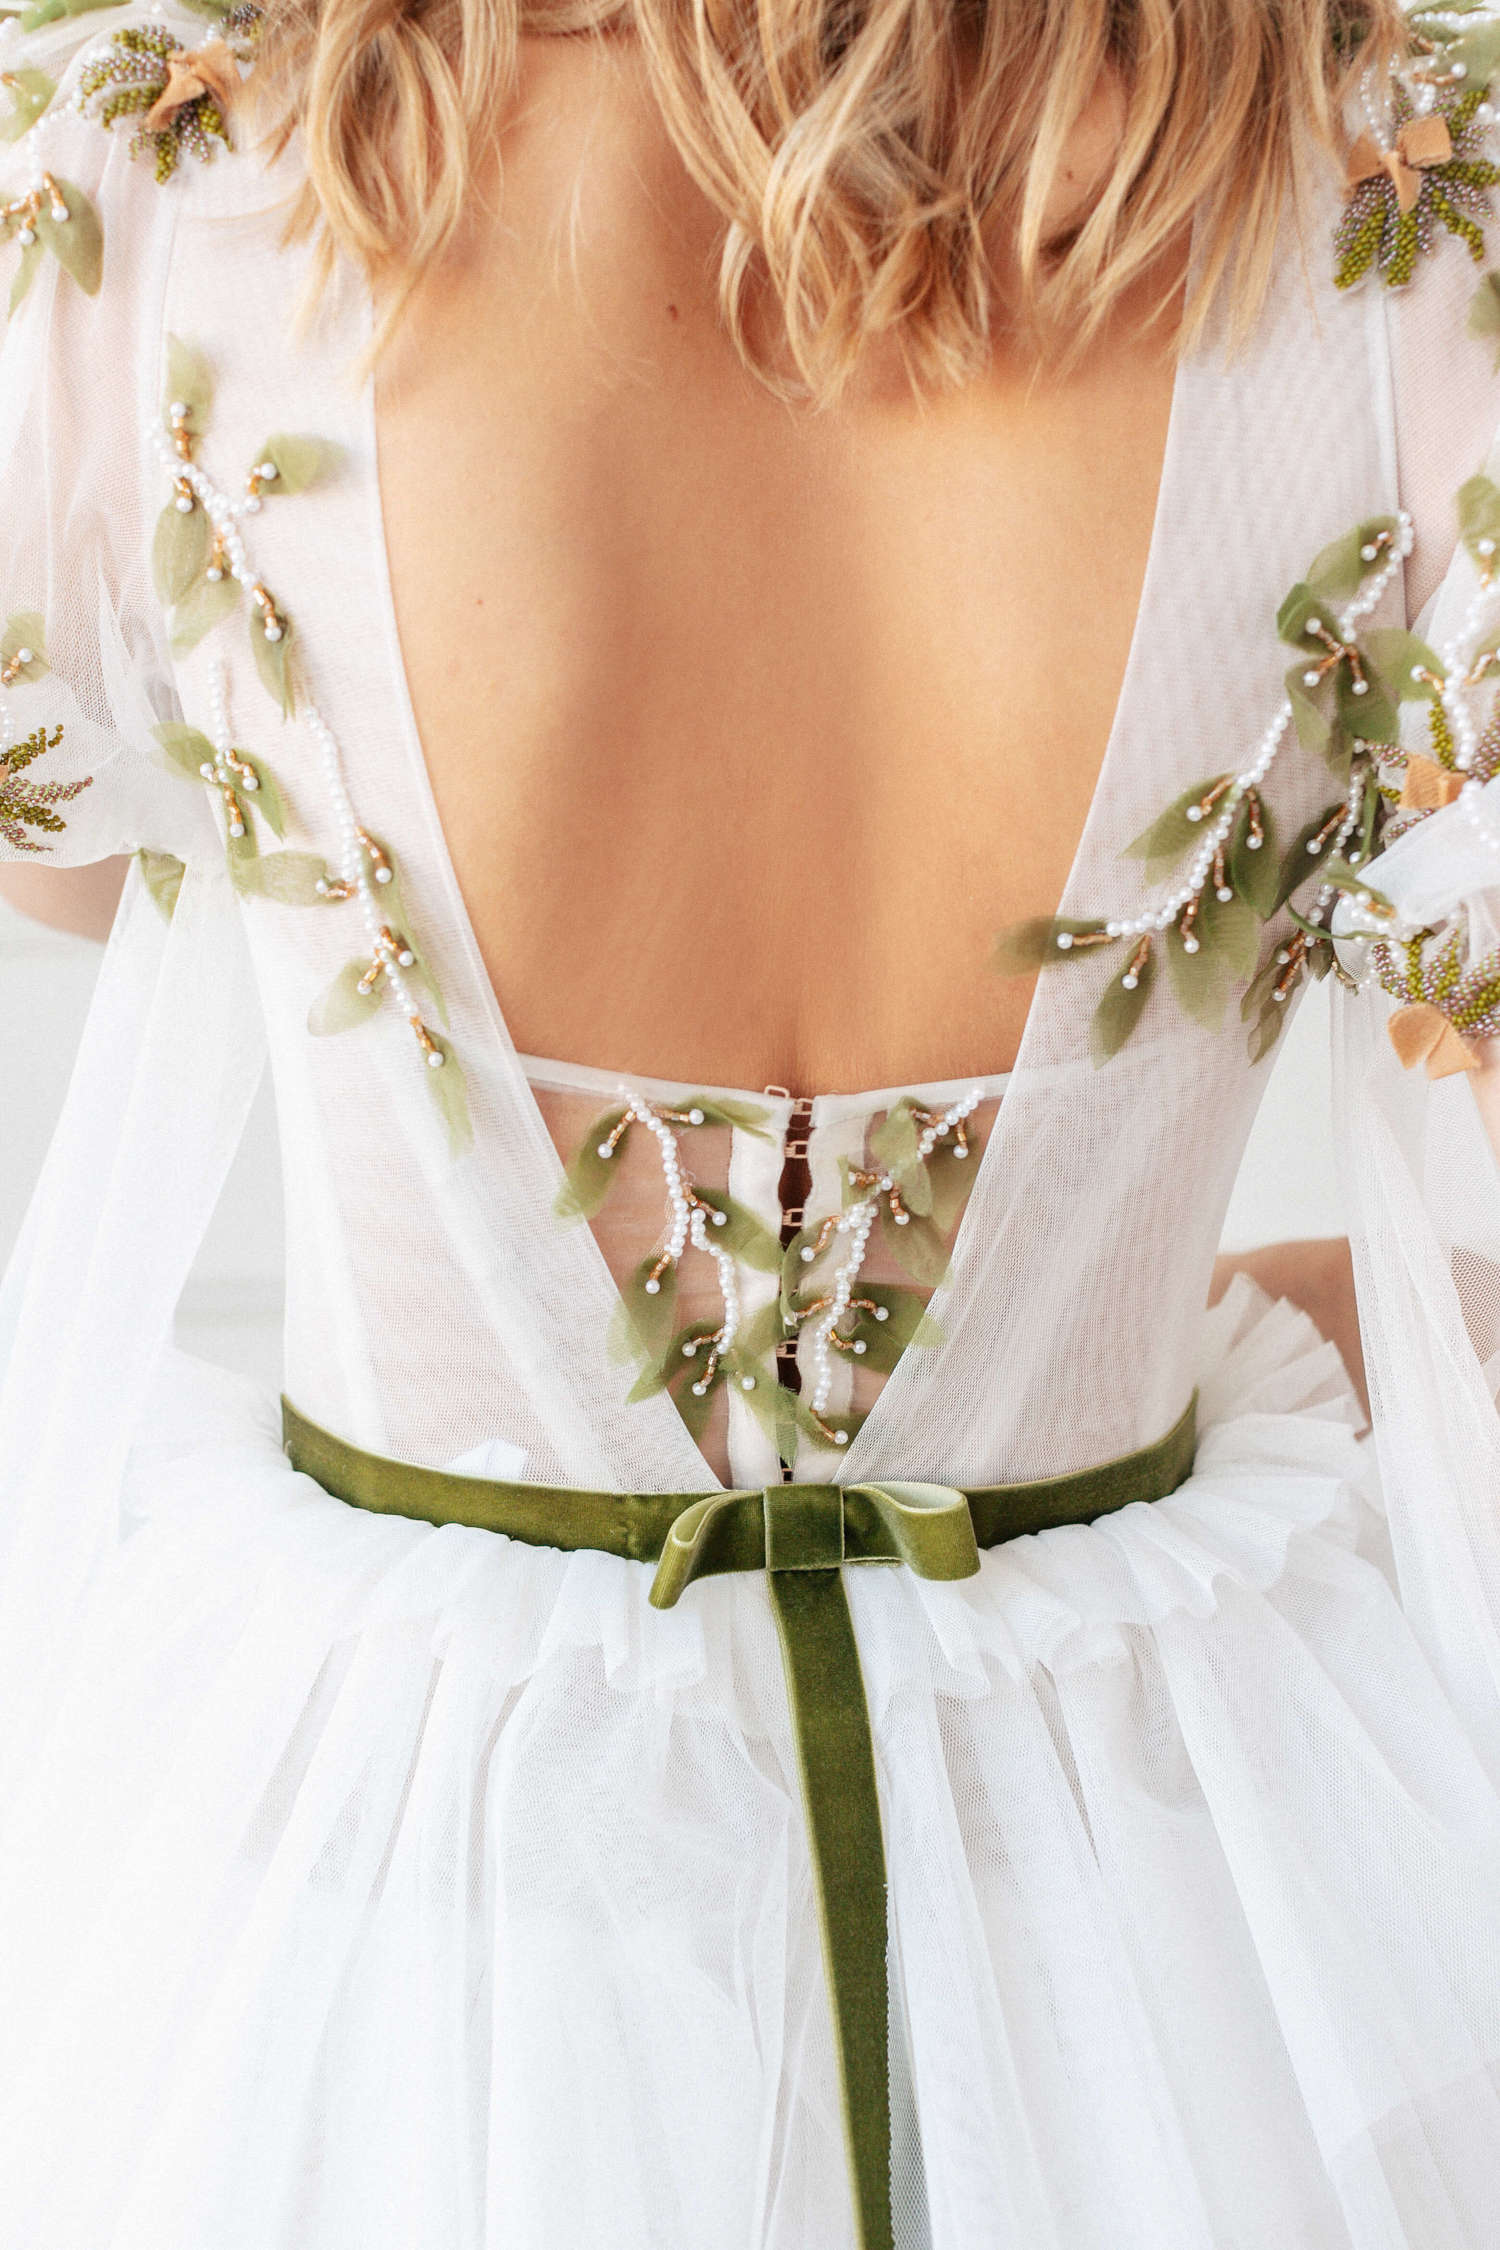 Princess modest wedding dress Gven with short sleeves by Rara Avis at Dell' Amore Bridal, Auckland, NZ. 7